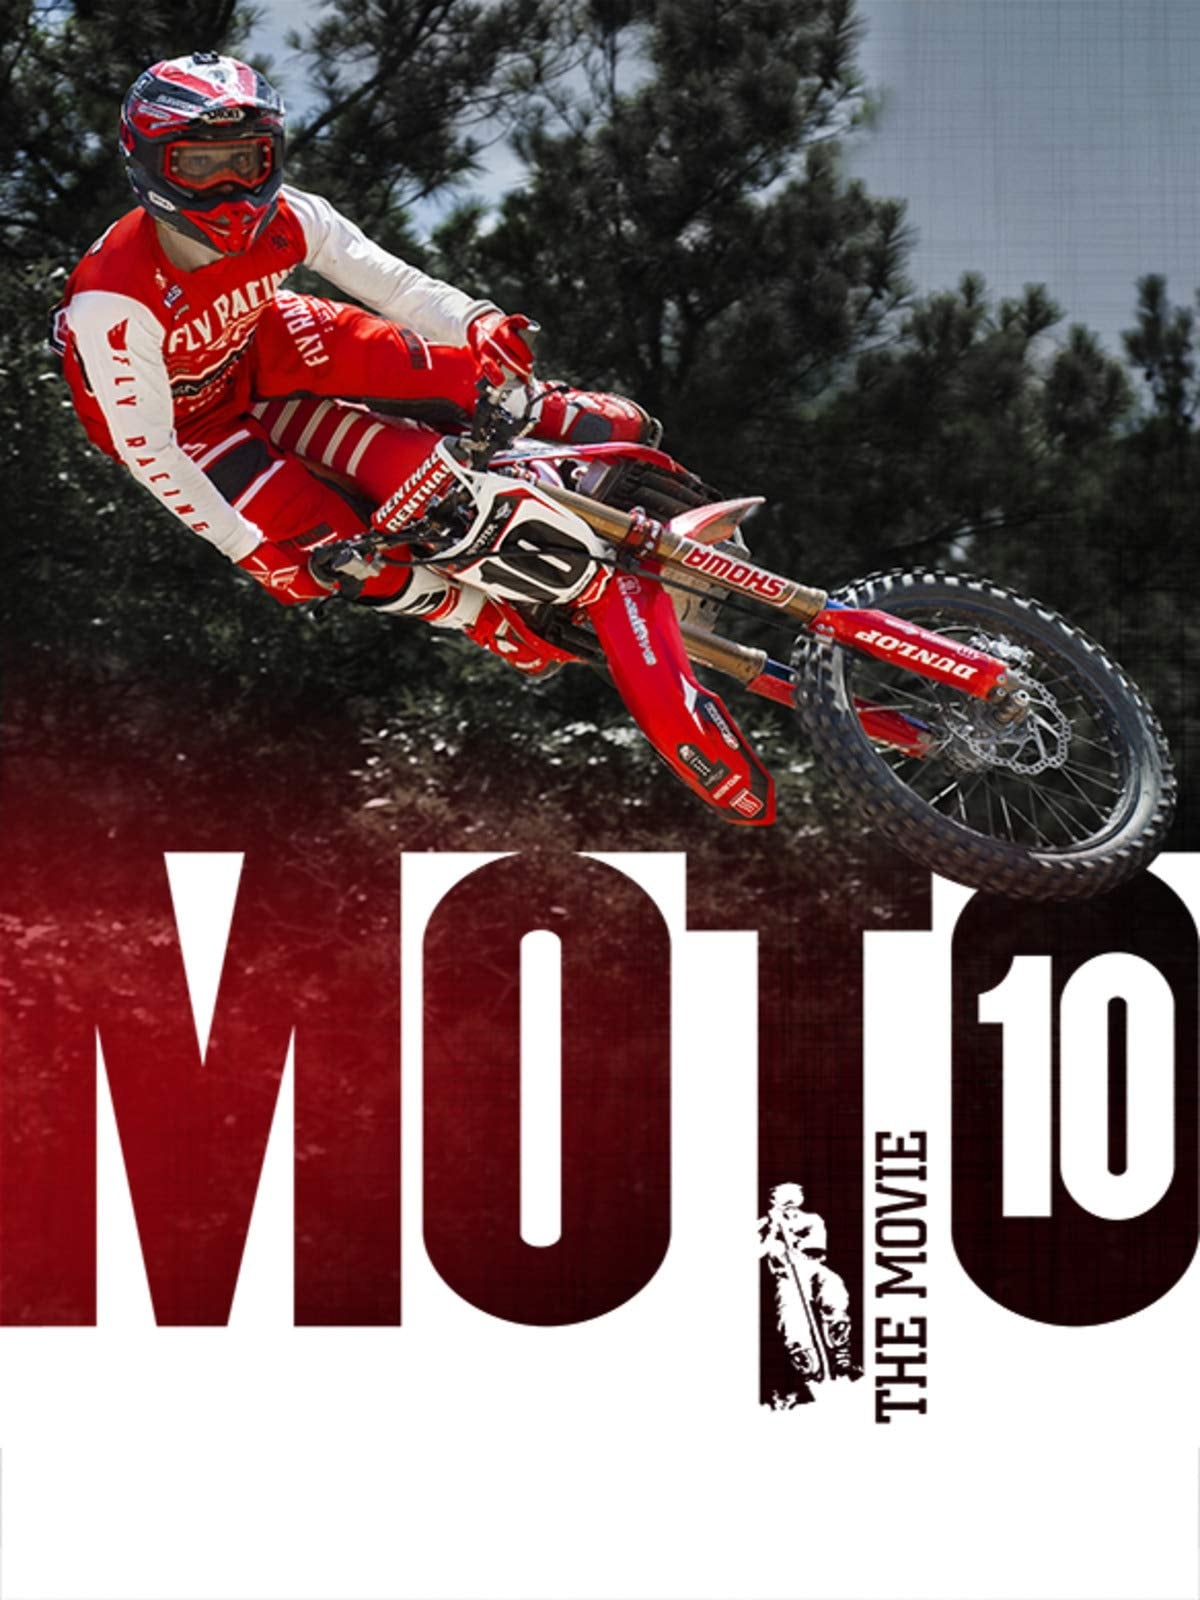 Moto 10: The Movie